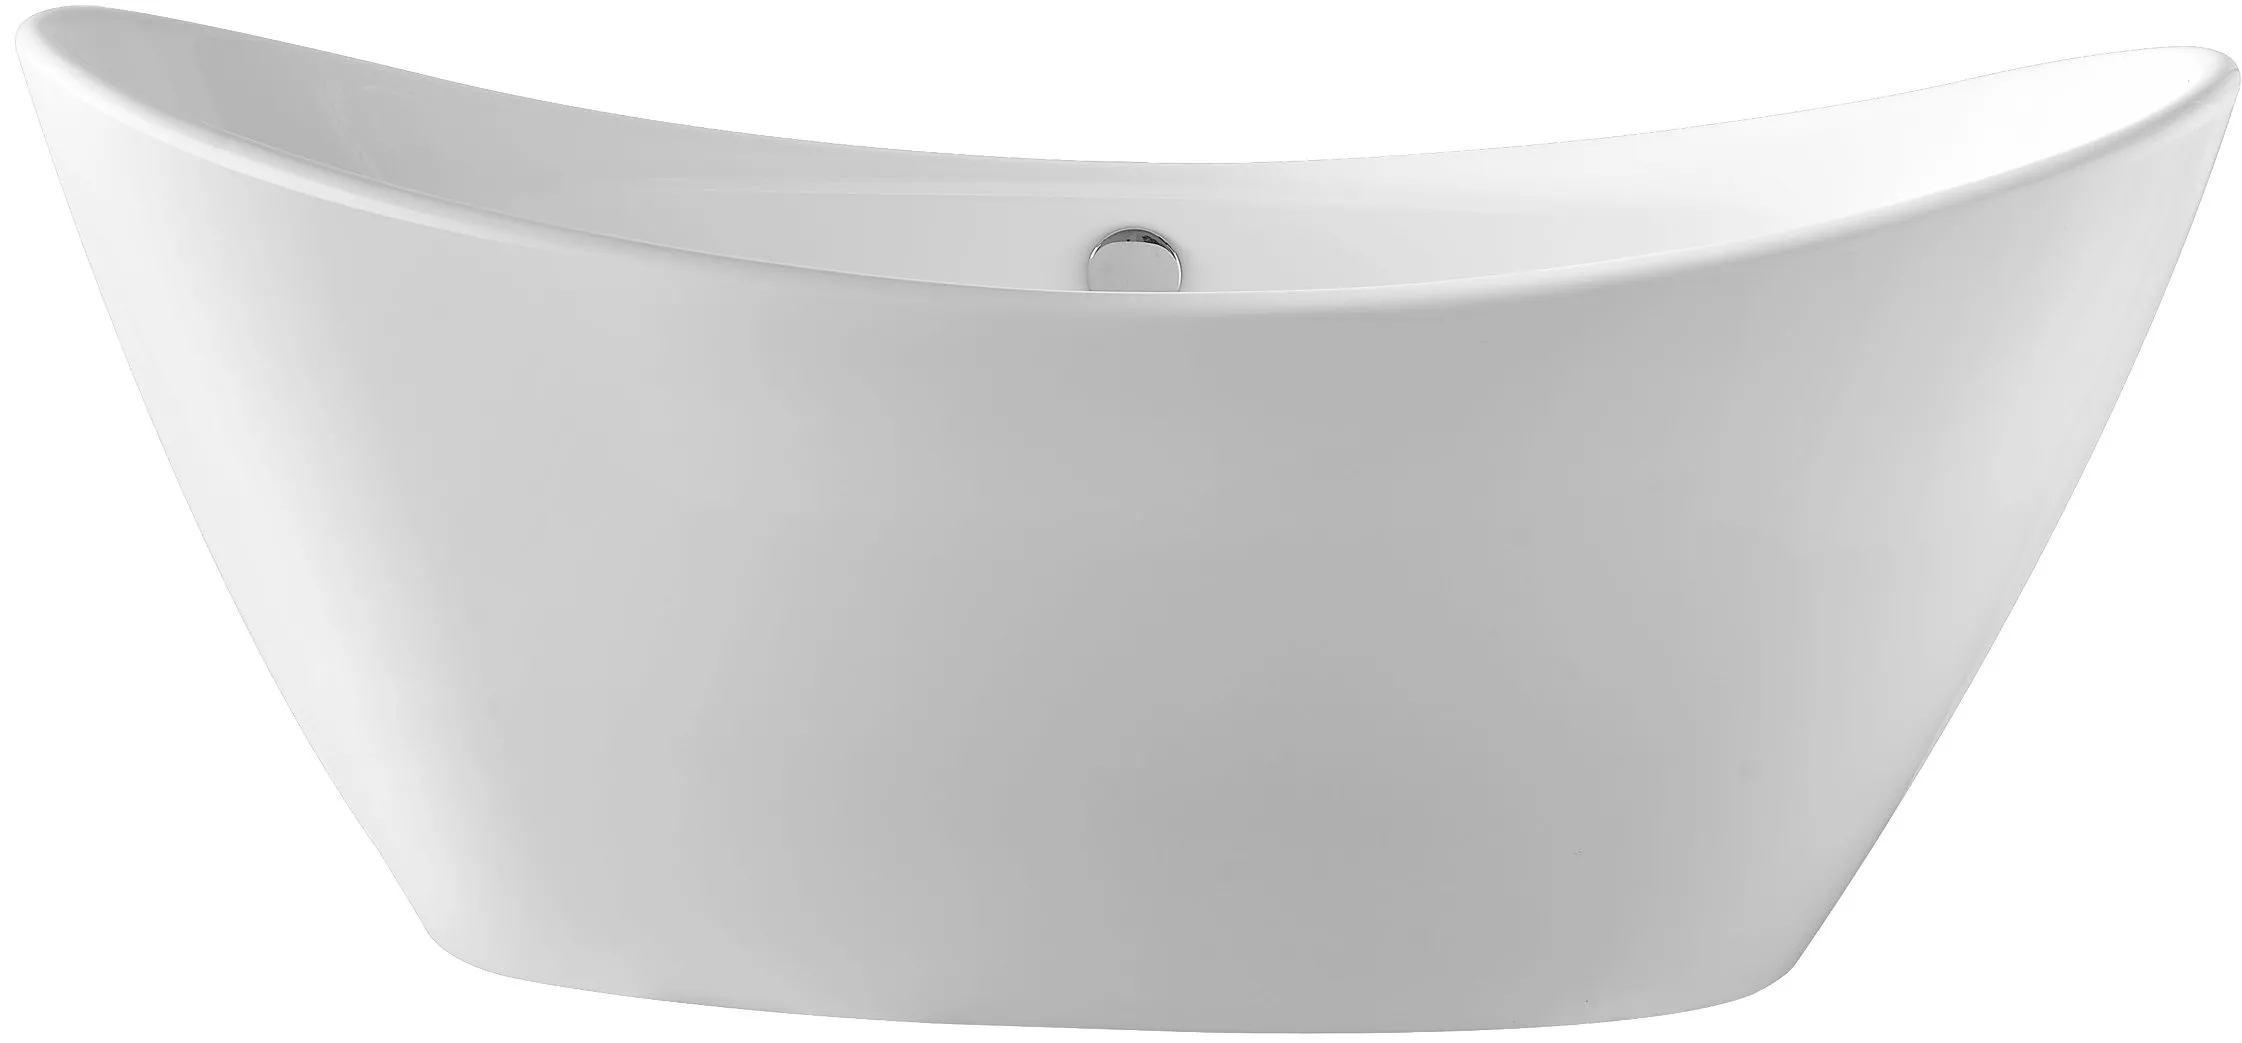 Акриловая ванна Swedbe Vita 8805, цвет белый - фото 1